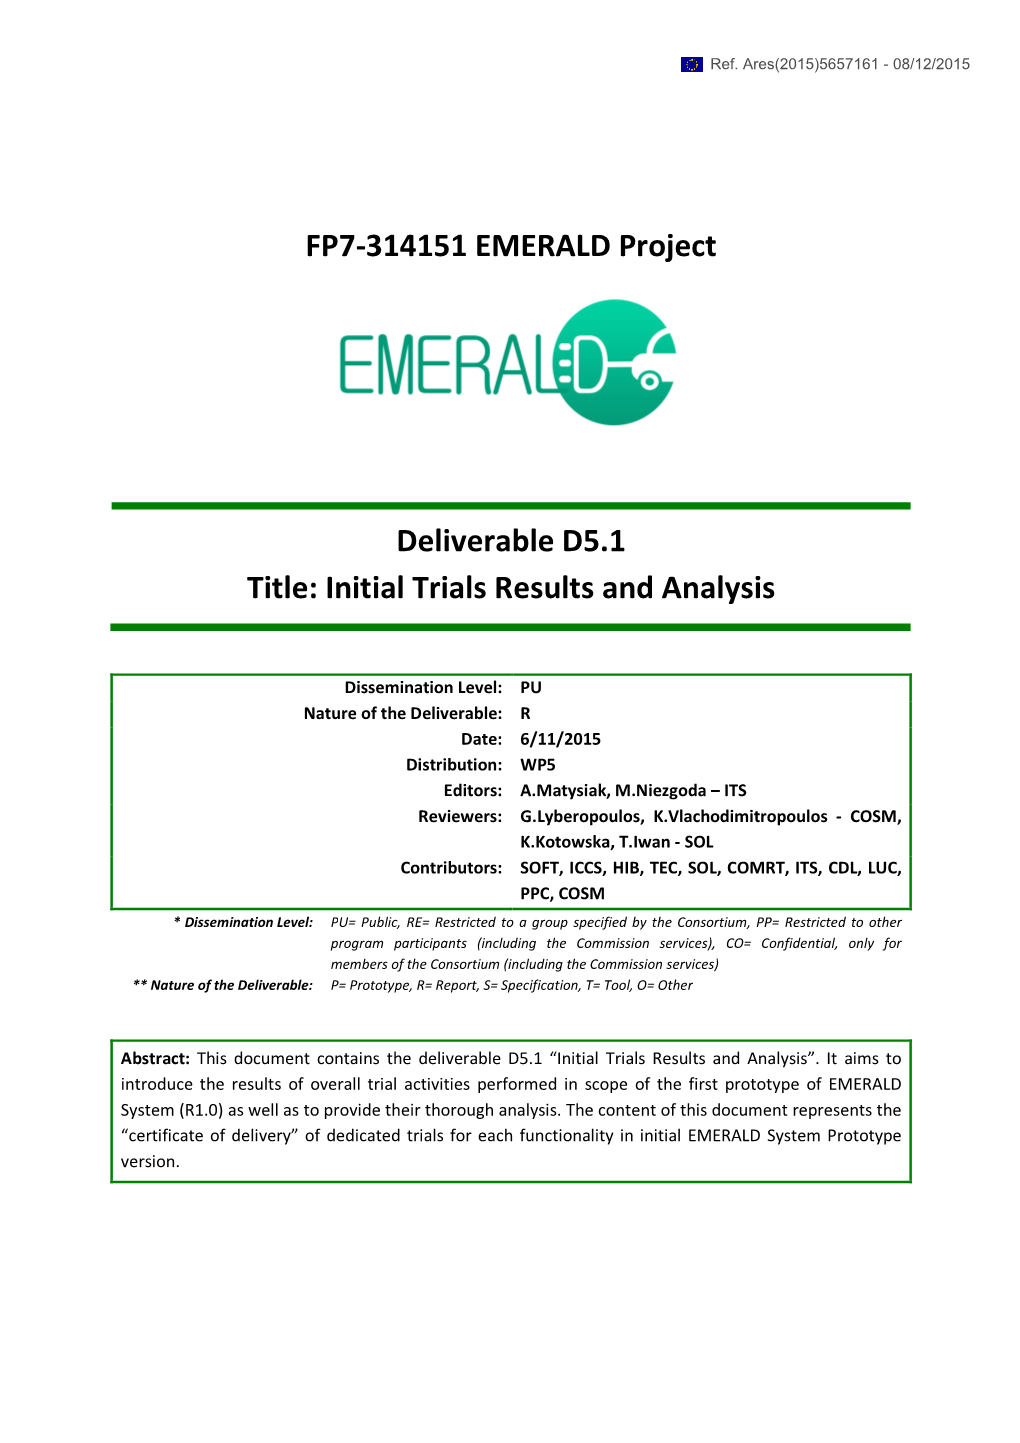 FP7-314151 EMERALD Project Deliverable D5.1 Title: Initial Trials